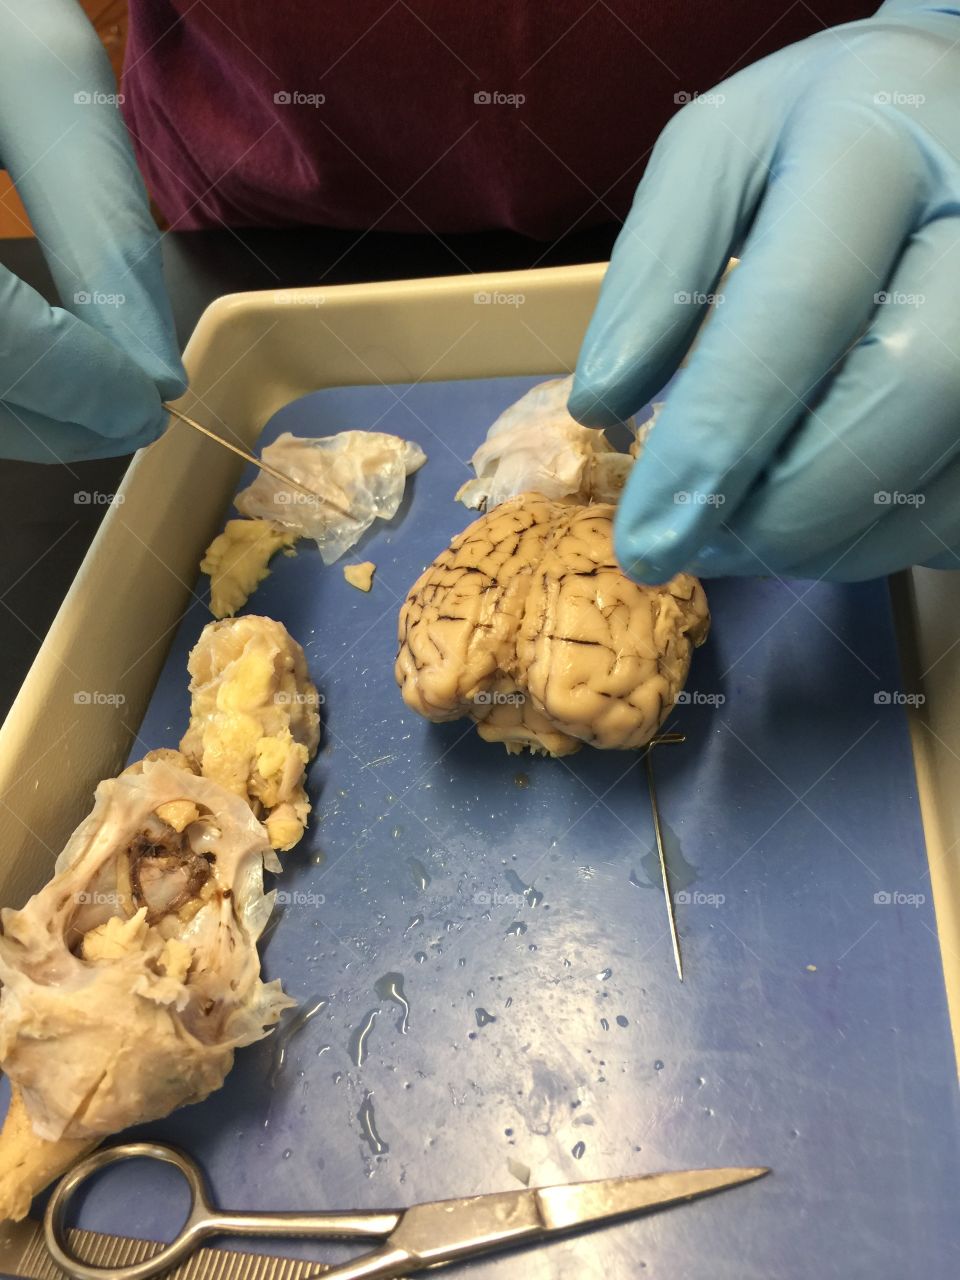 Brain inspection